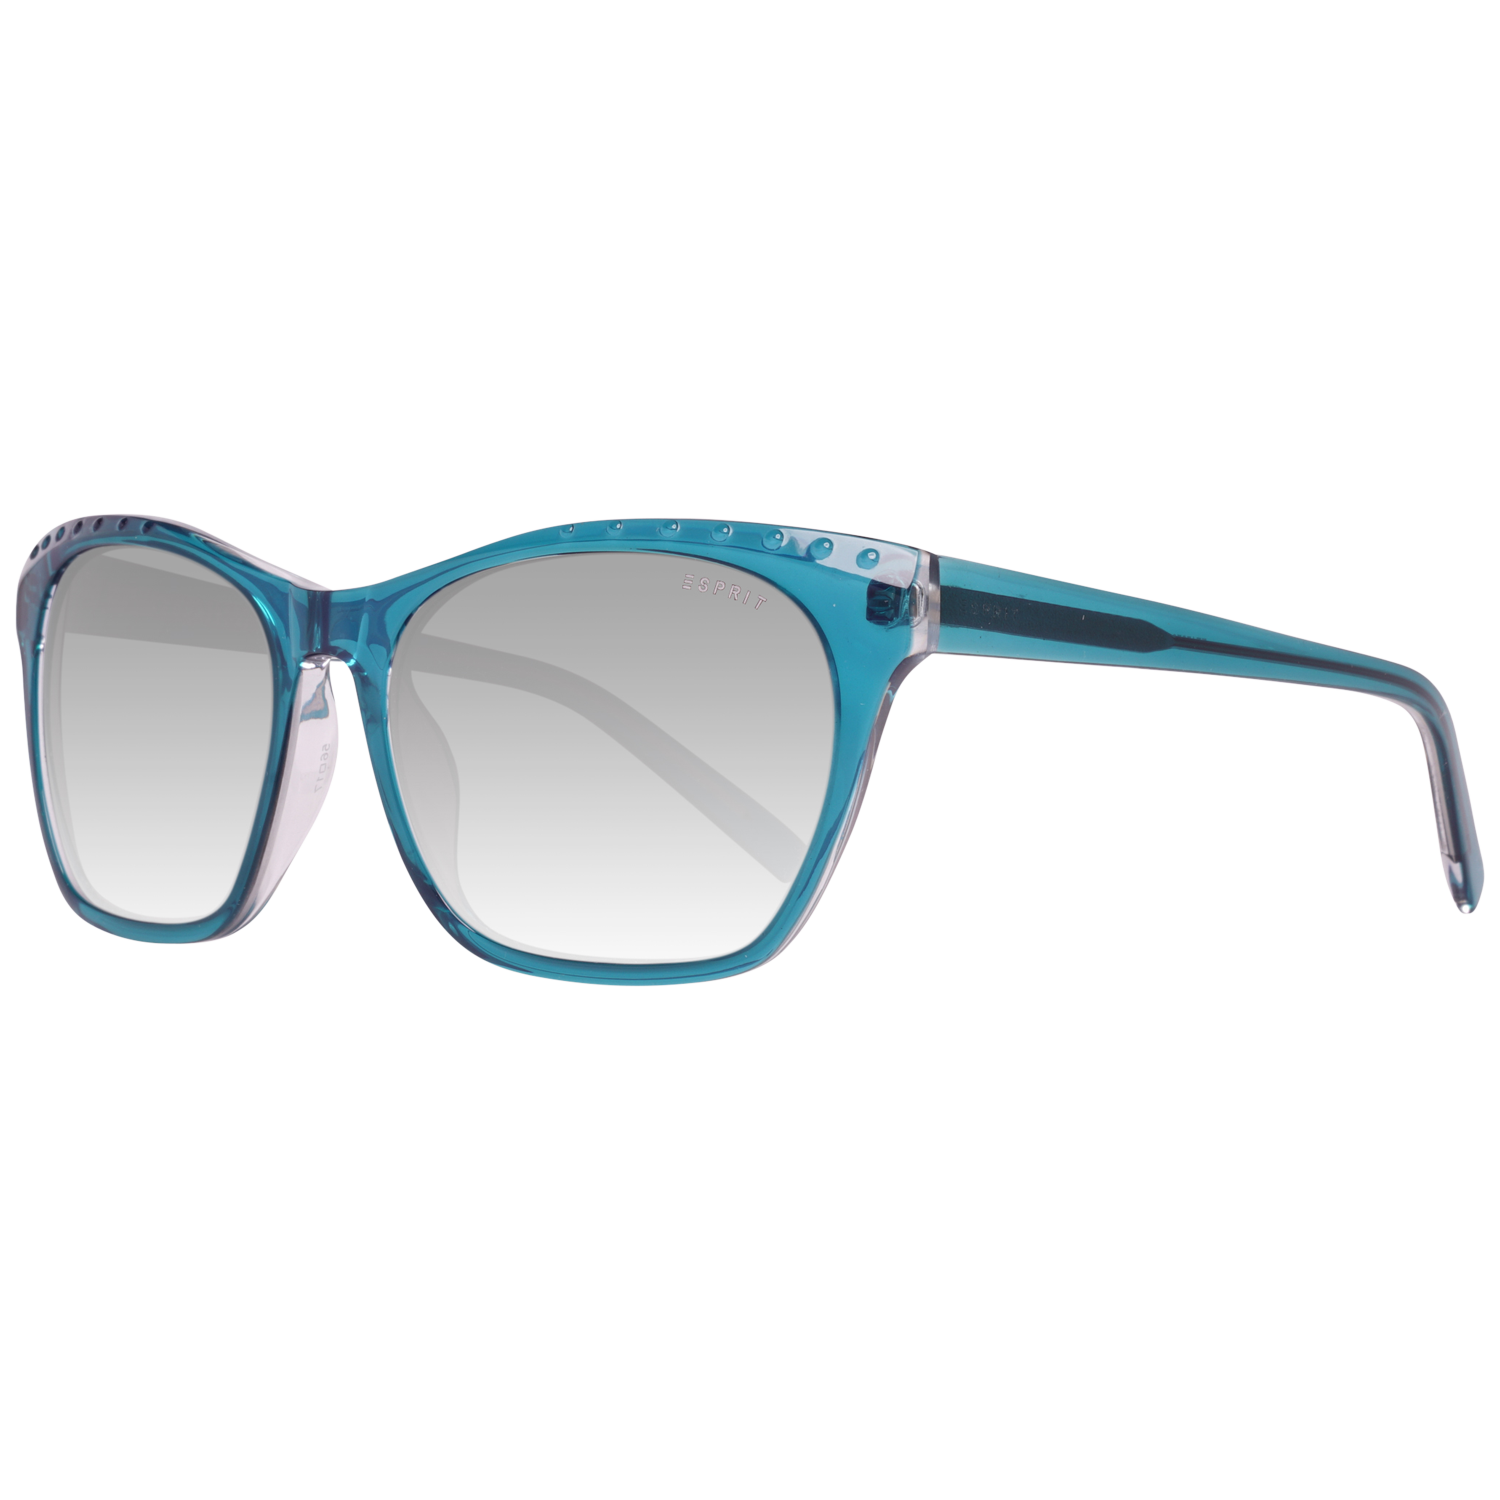 Esprit Sunglasses ET17873 563 56 Blue